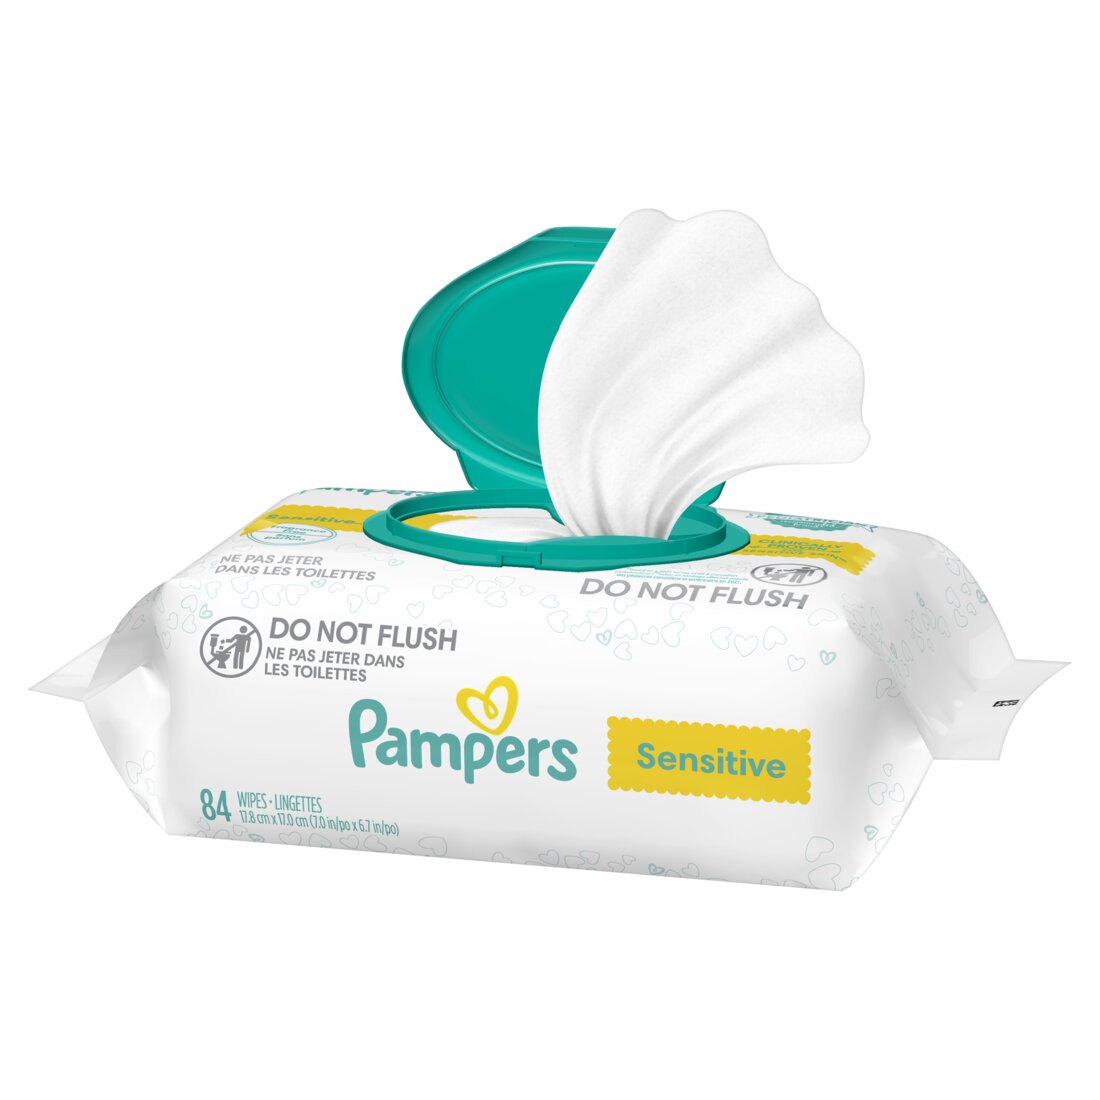 Pampers Baby Wipes Sensitive Perfume Free 1X Pop-Top Pack - 84ct/8pk